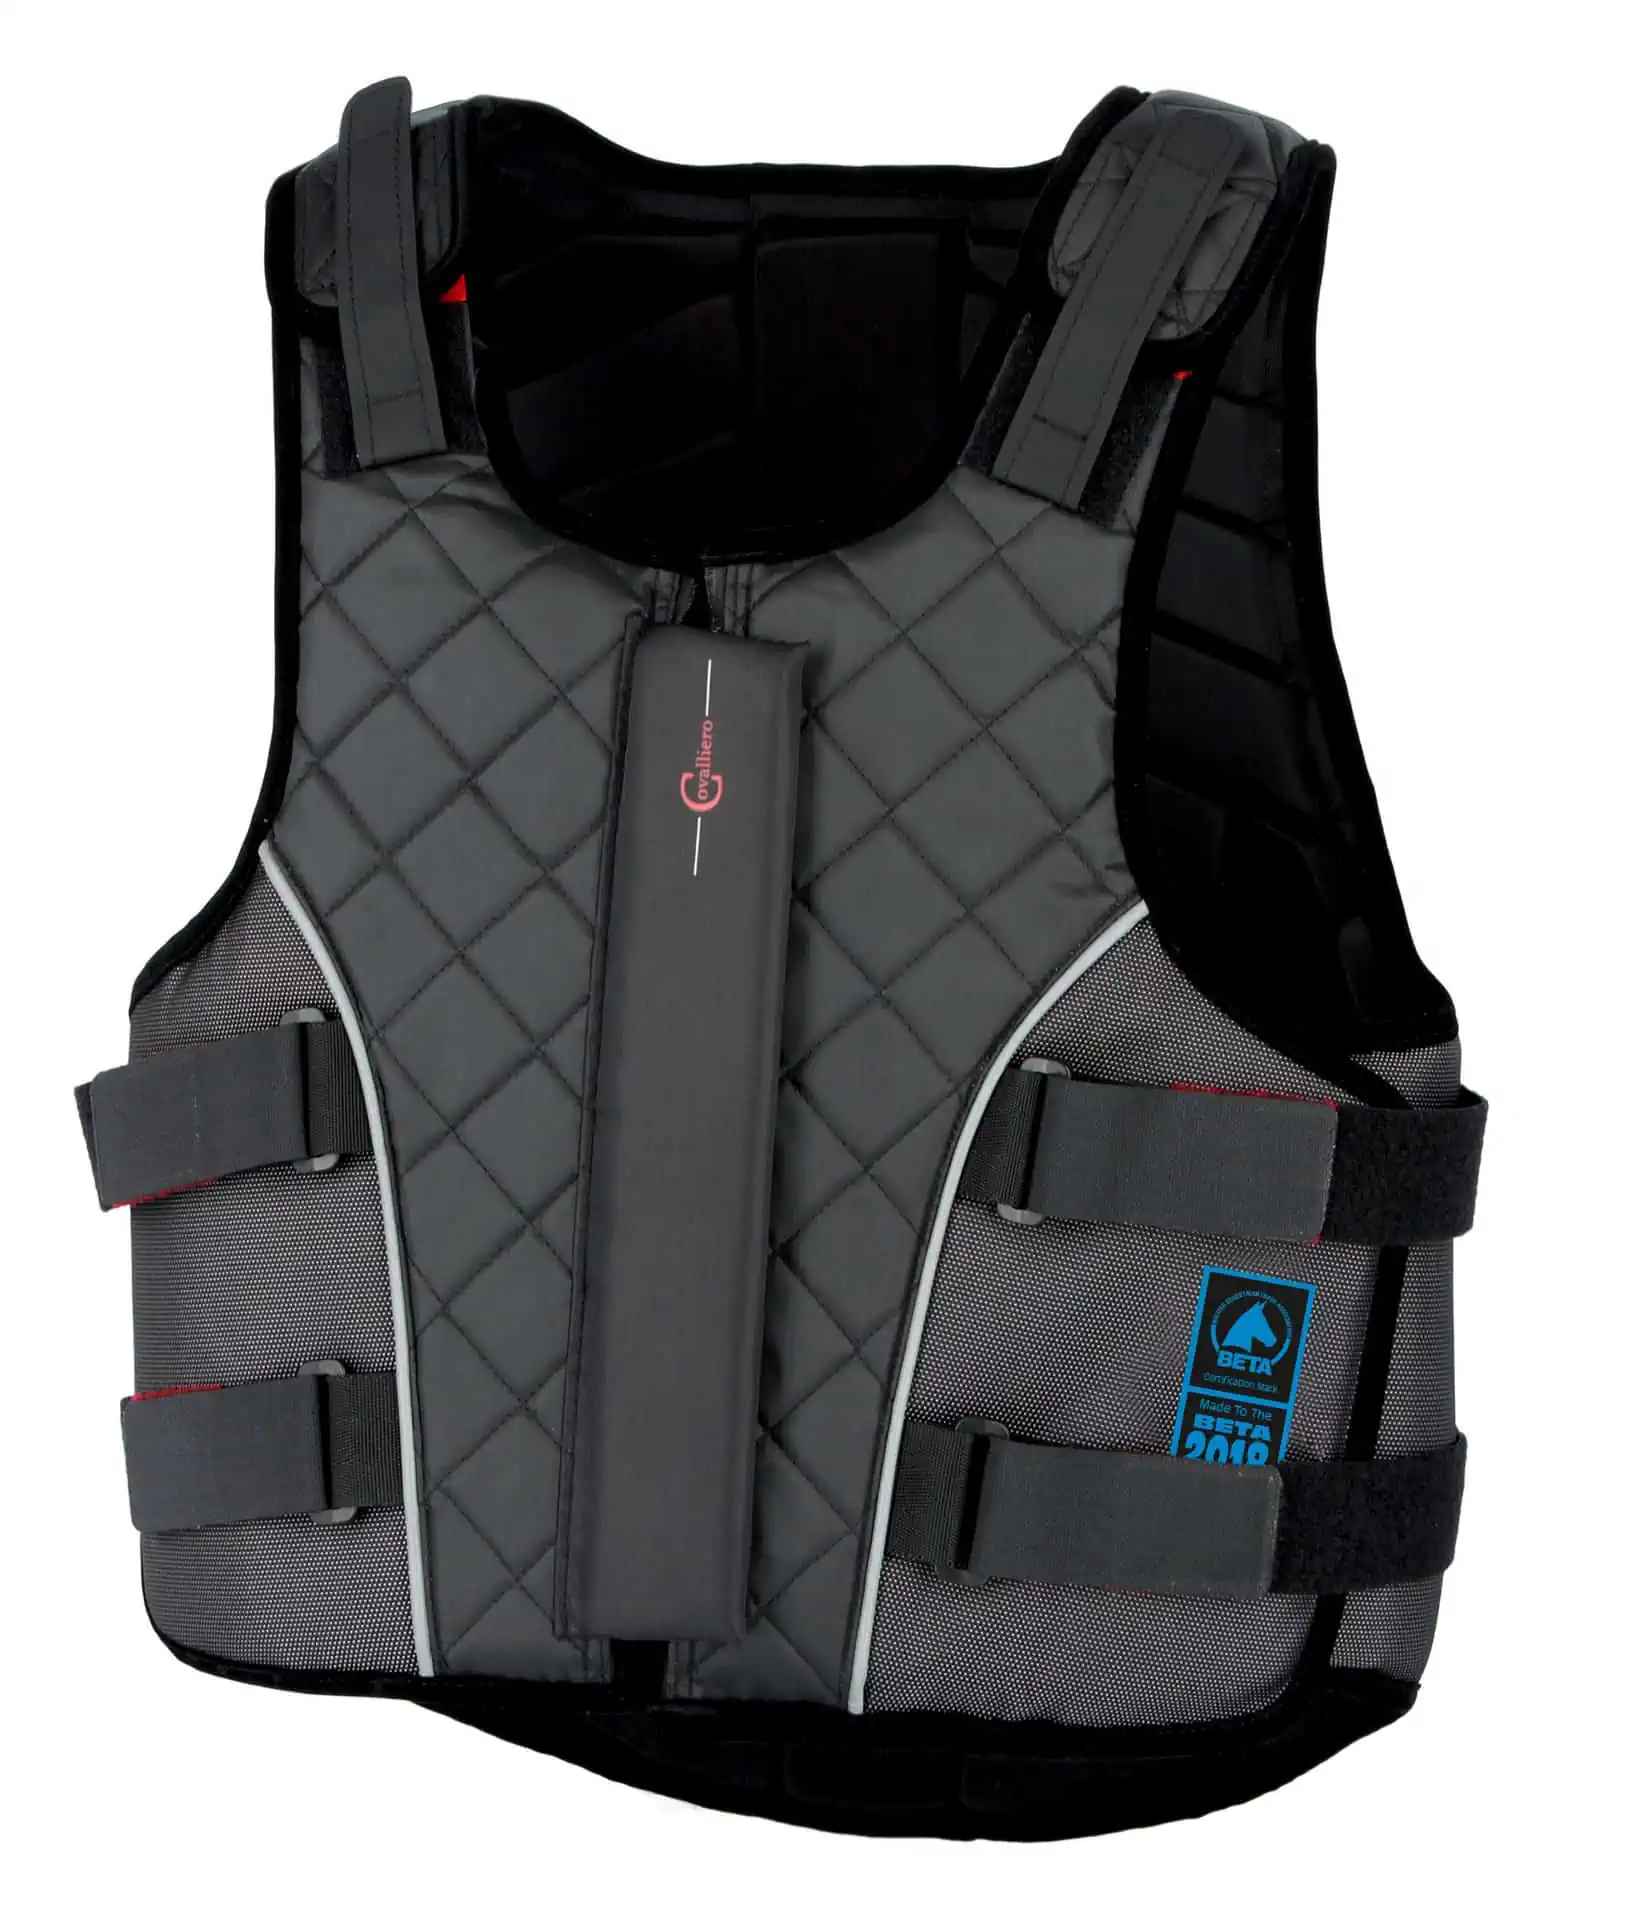 Safety Vest ProtectoFlex 315 Light, Child Size XS, BETA